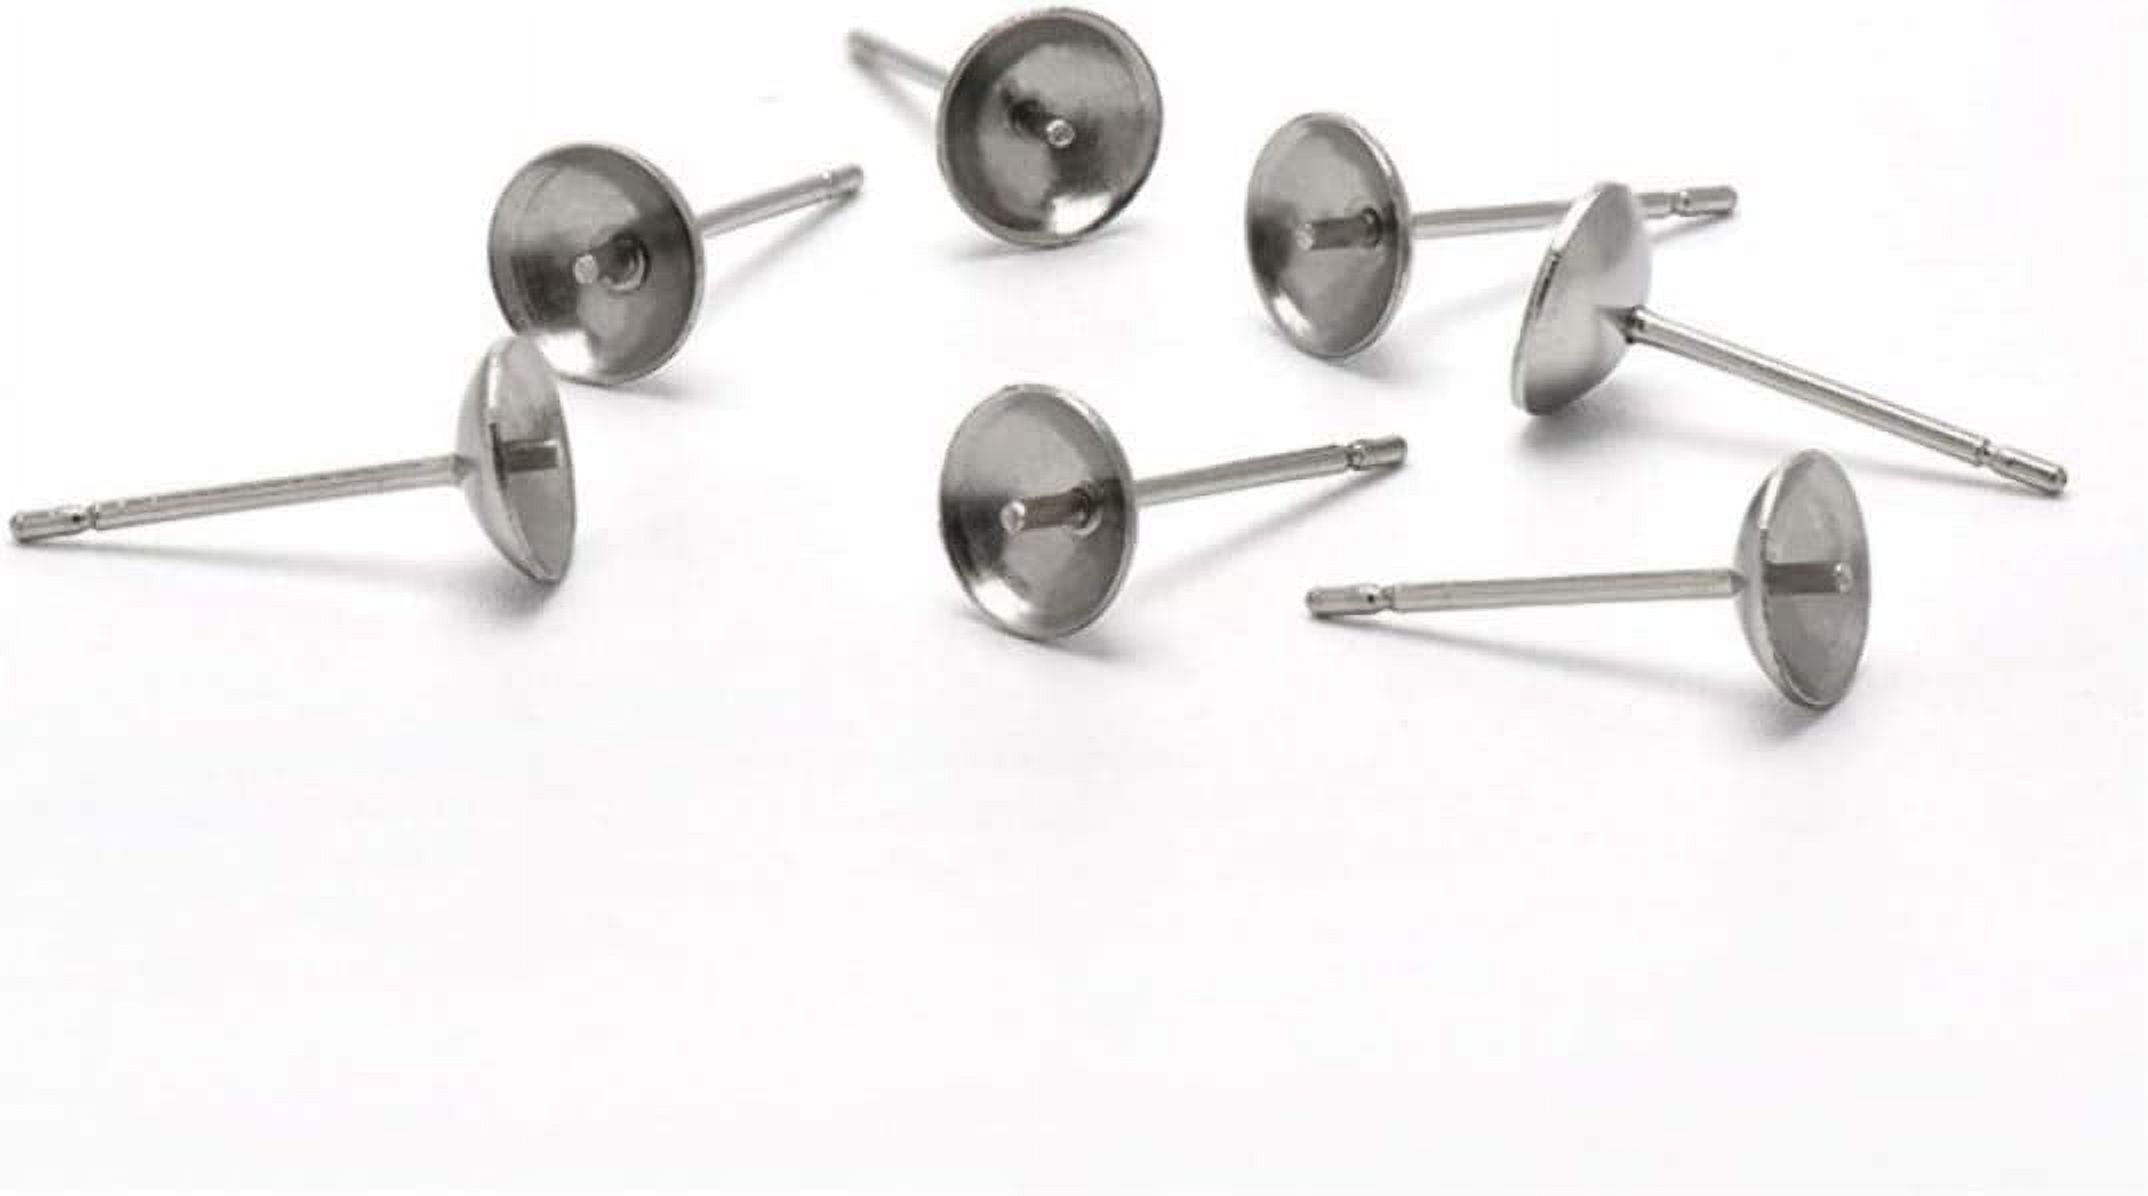 10x Gold 304 Stainless Steel Earring Posts Bumpy Round Stud Findings Earnut  16mm